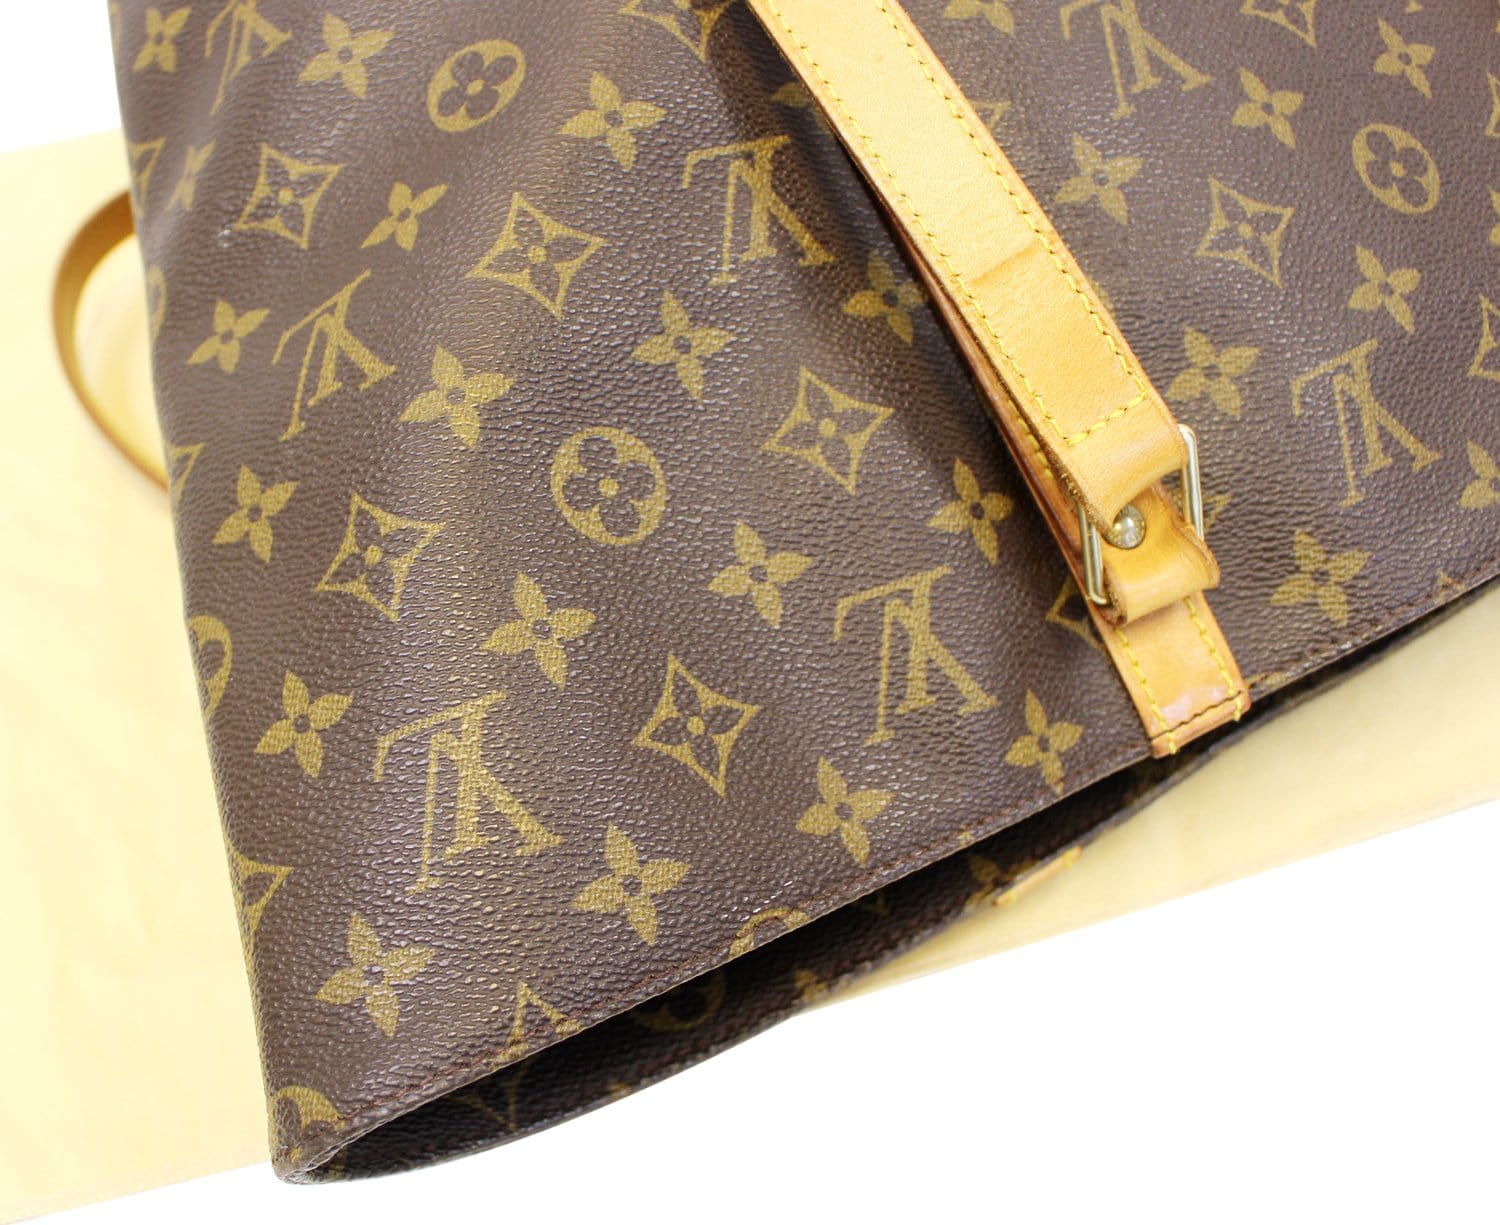 Shop Louis Vuitton Tote Bags for Women